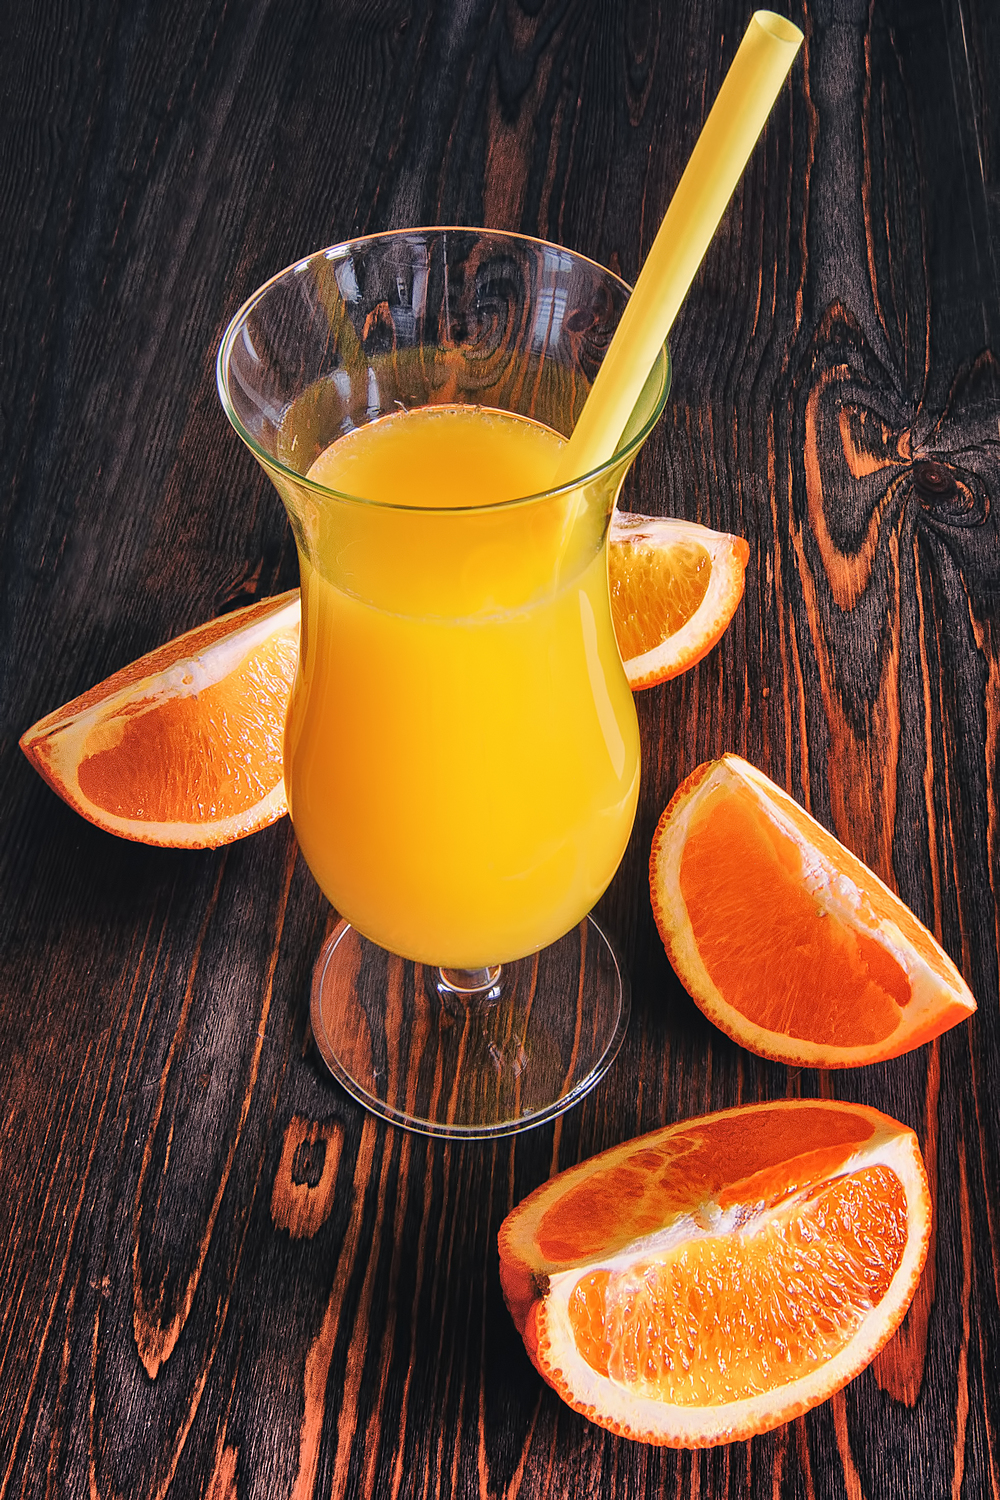  Stock image of orange juice and slices. 